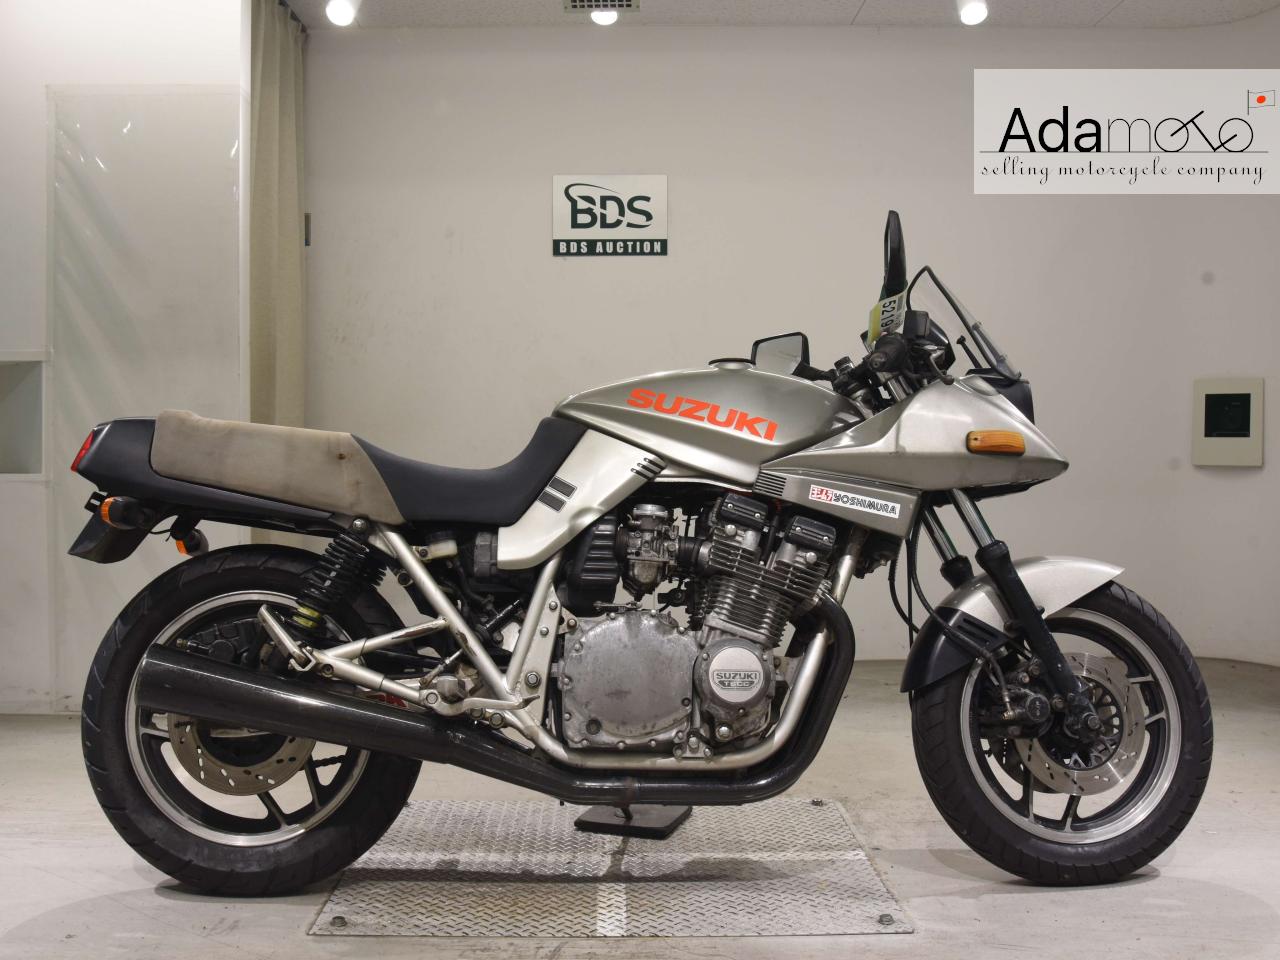 Suzuki GSX750S KATANA - Adamoto - Motorcycles from Japan